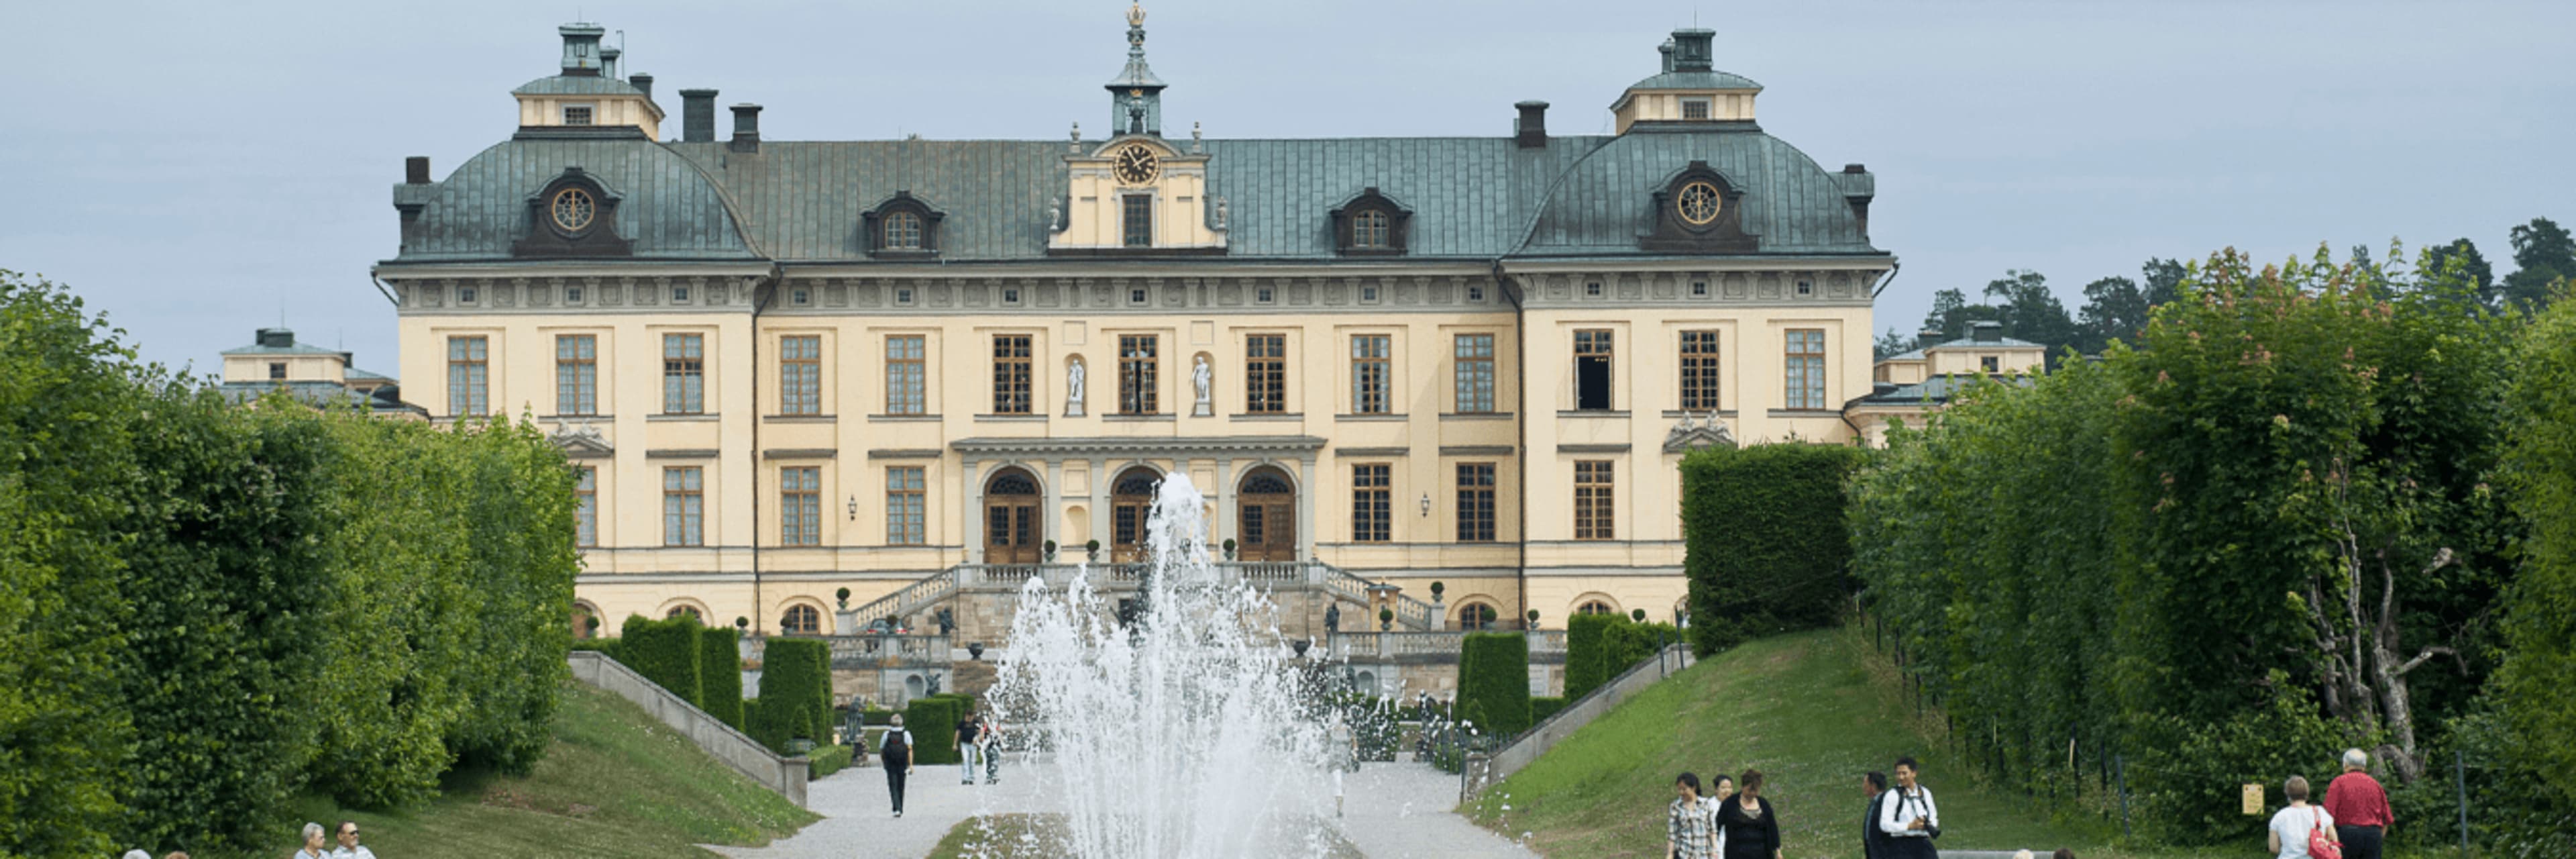 The Drottningholm Palace, Stockholm